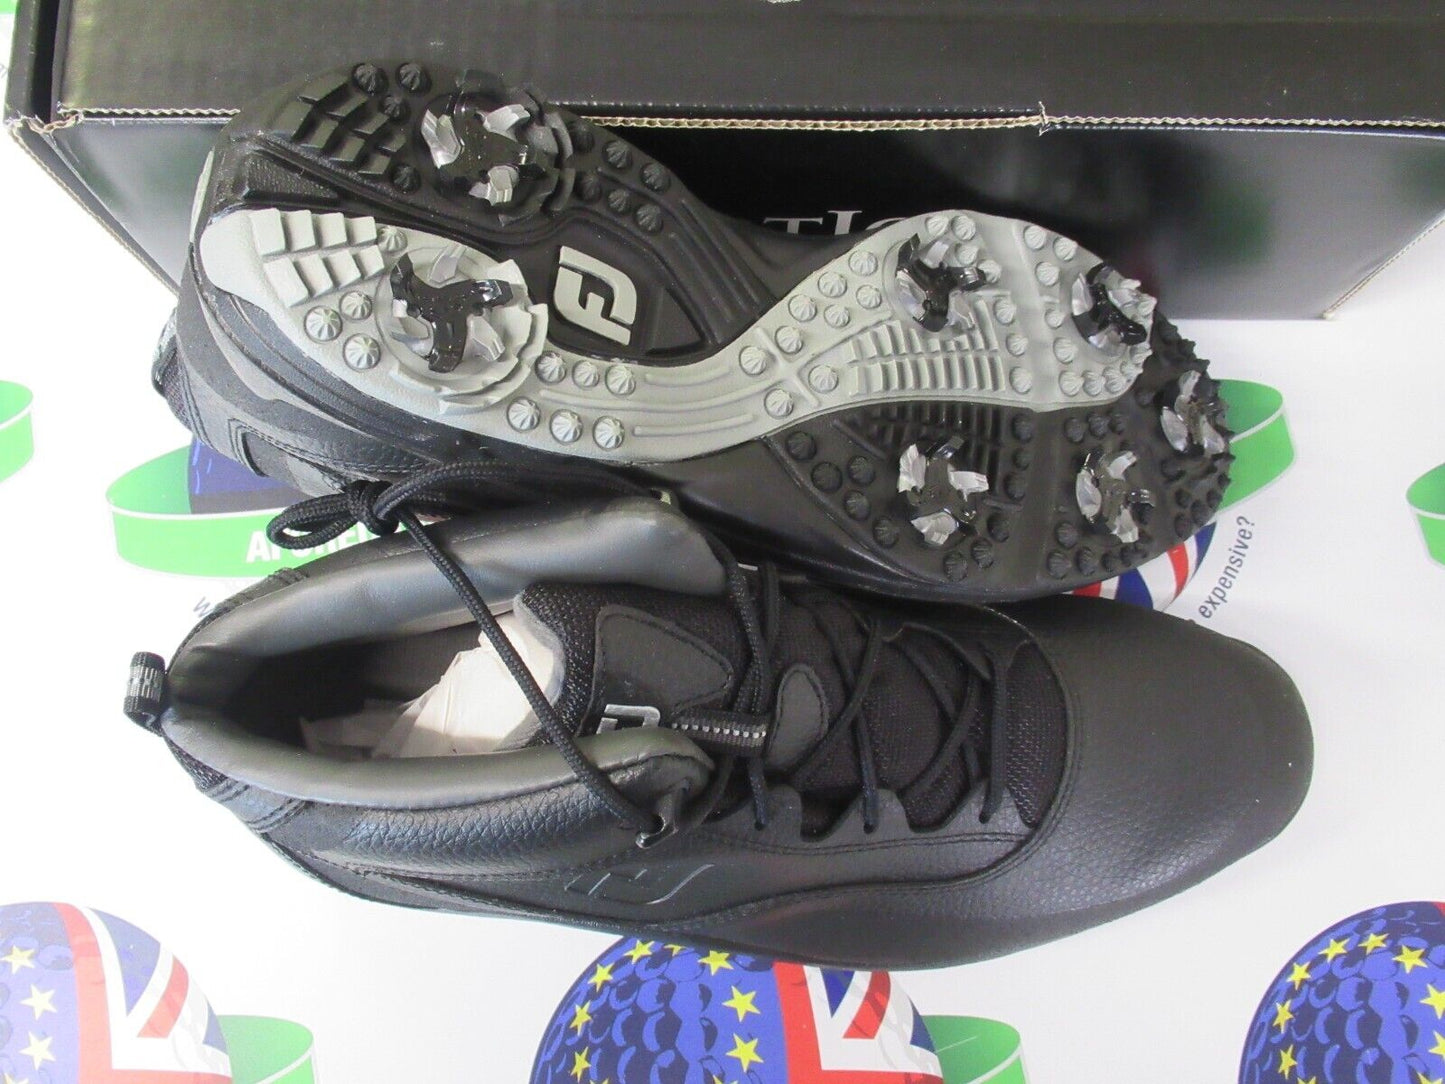 footjoy stormwalker winter waterproof golf boots black 50090k uk size 8 medium